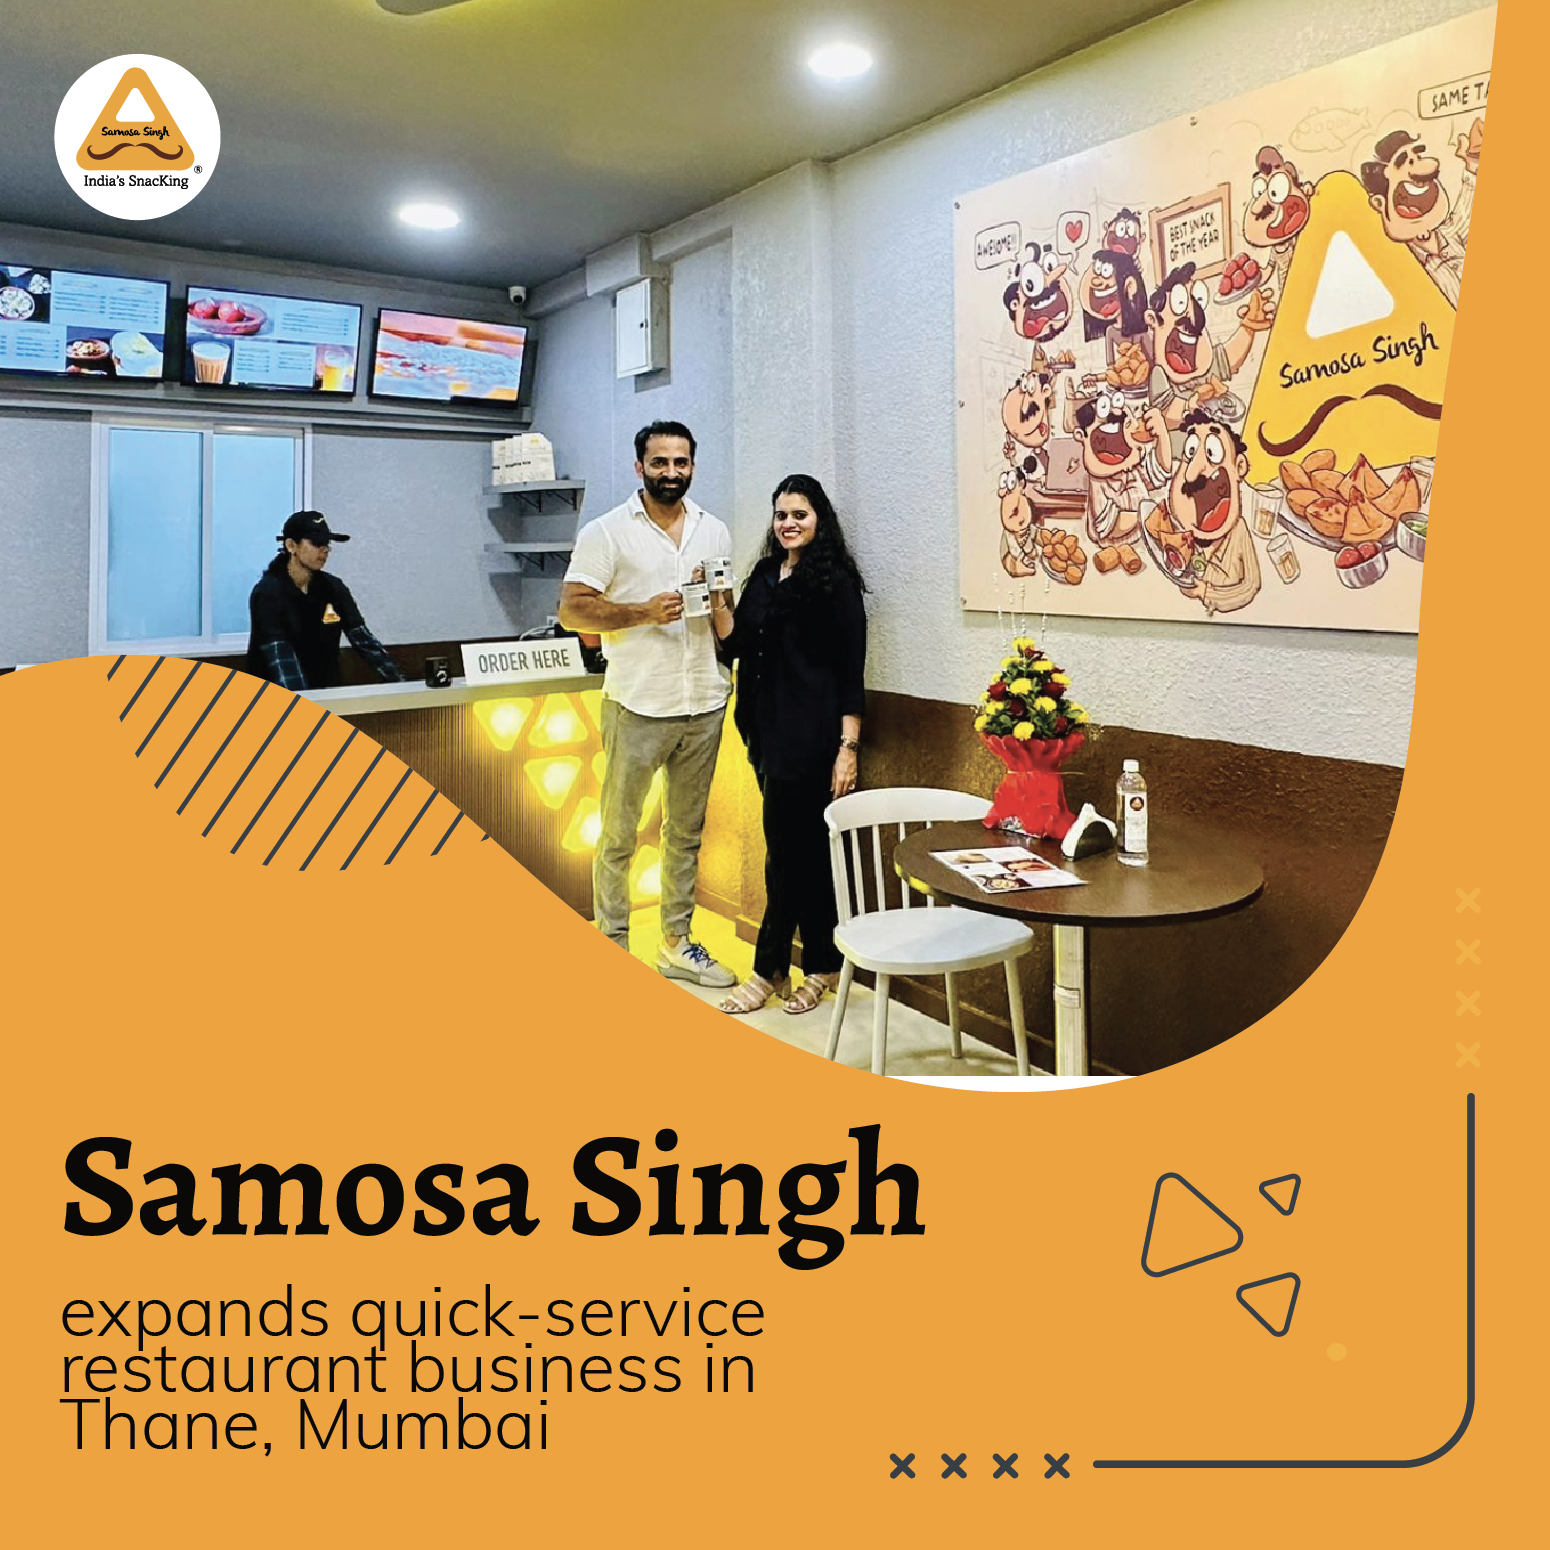 Samosa Singh expands quick-service restaurant business in Thane, Mumbai